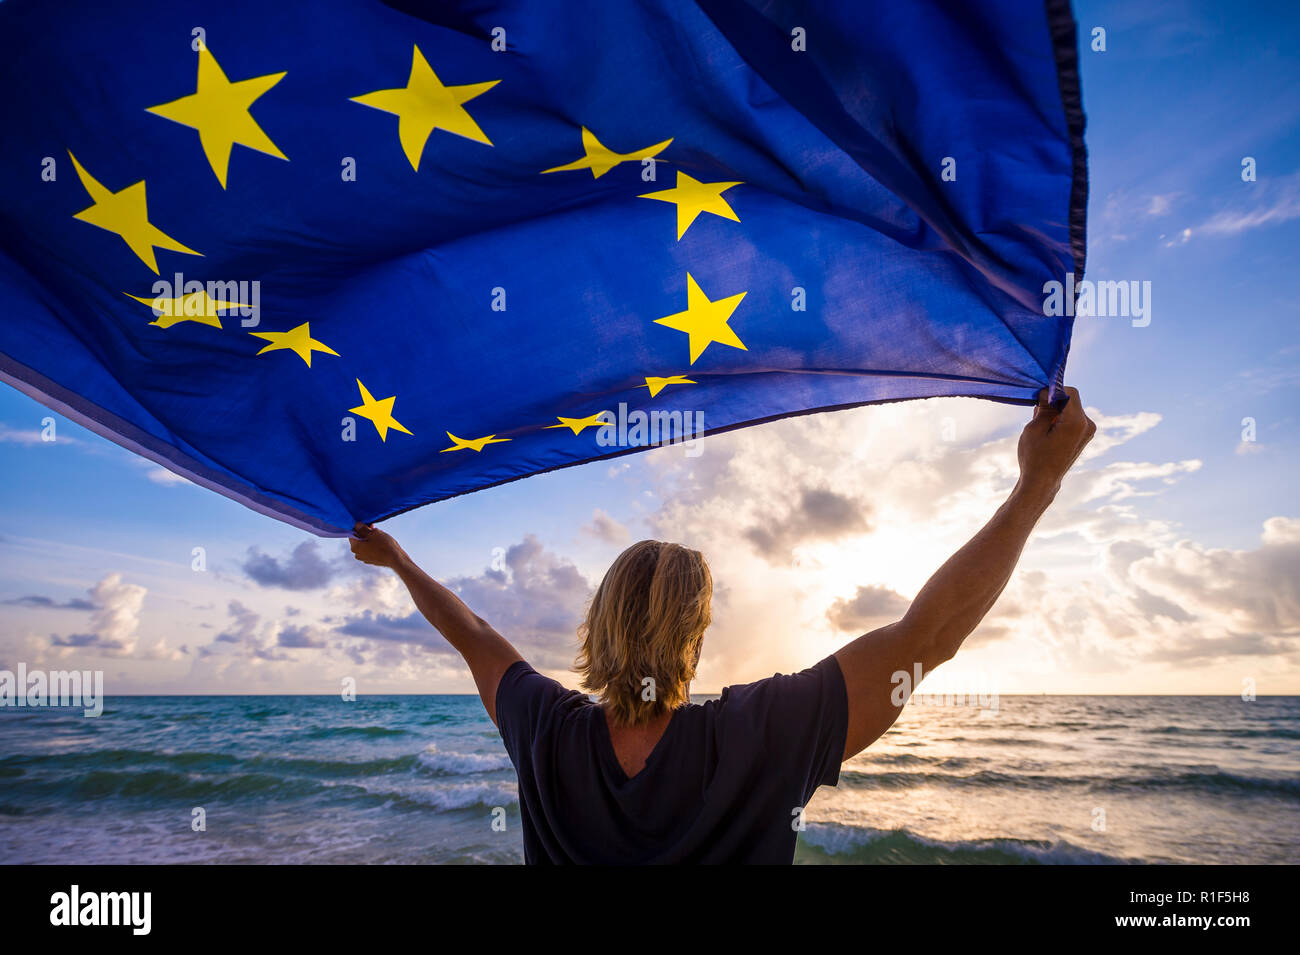 Man with blond hair holding EU European Union flag waving in the wind of a Mediterranean beach scene Stock Photo